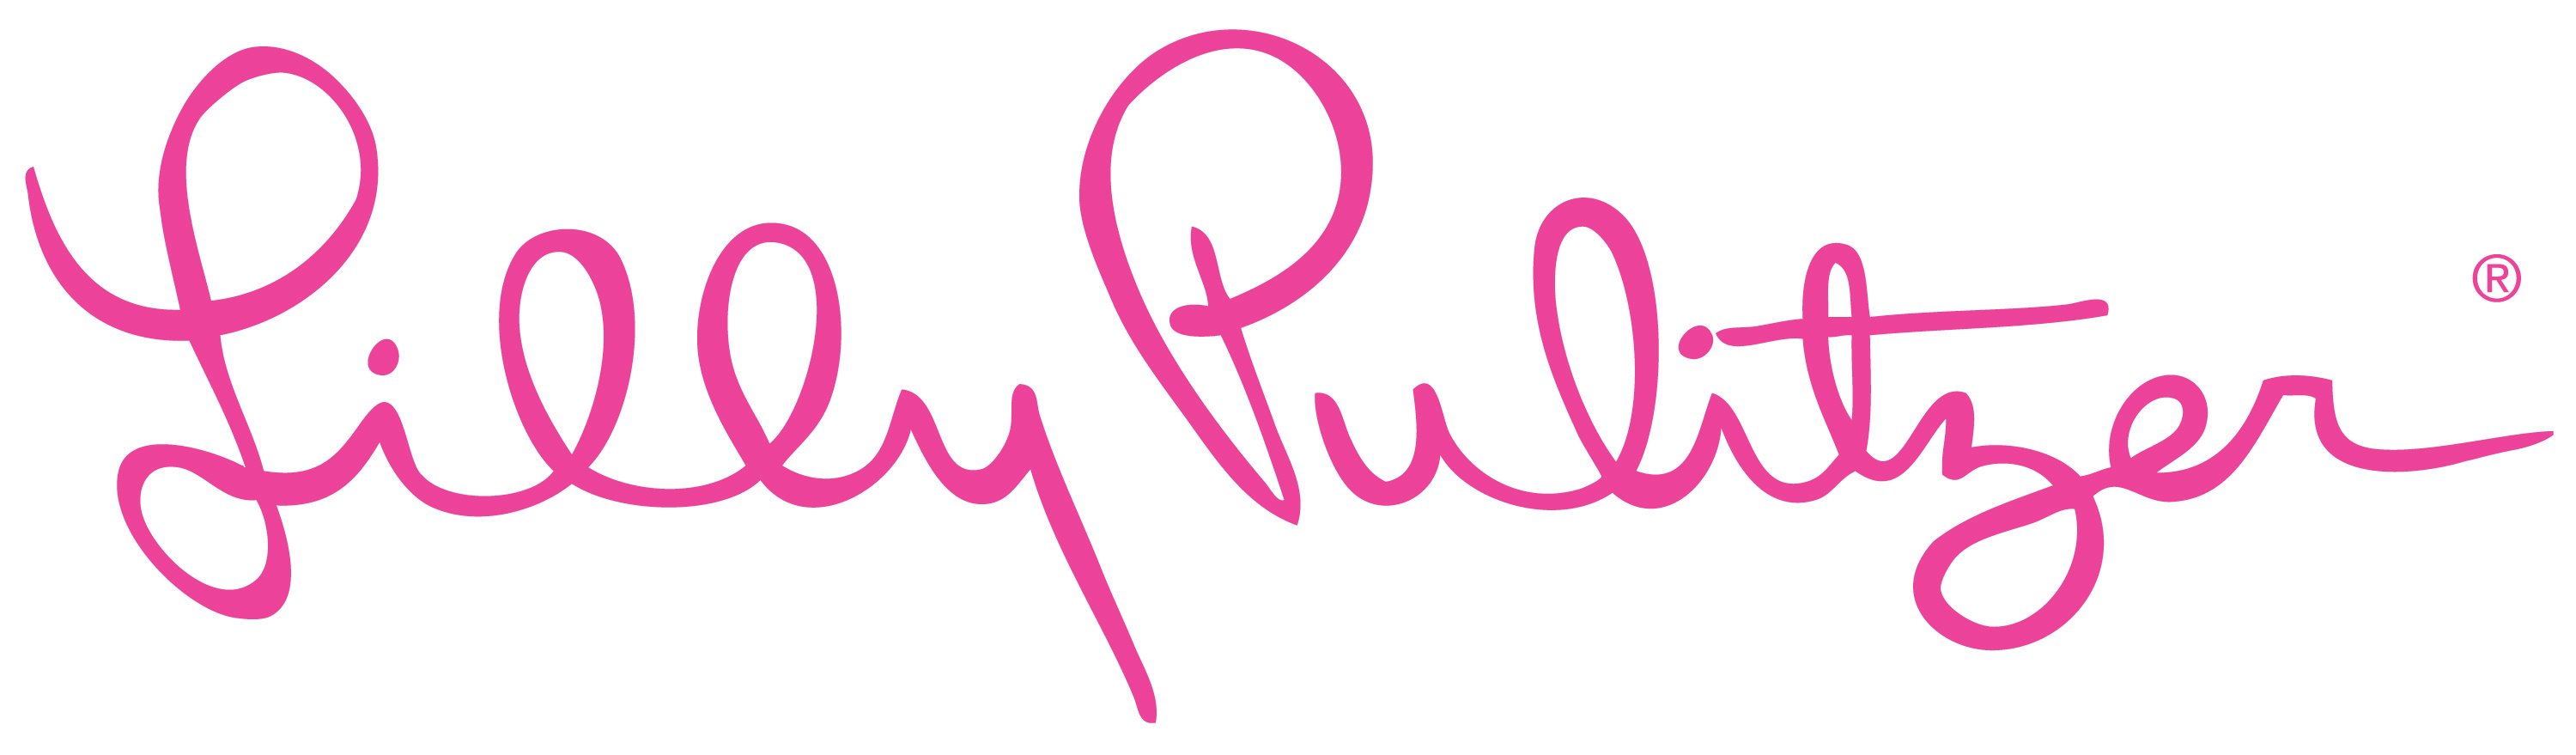 Lilly_Pulitzer_Logo